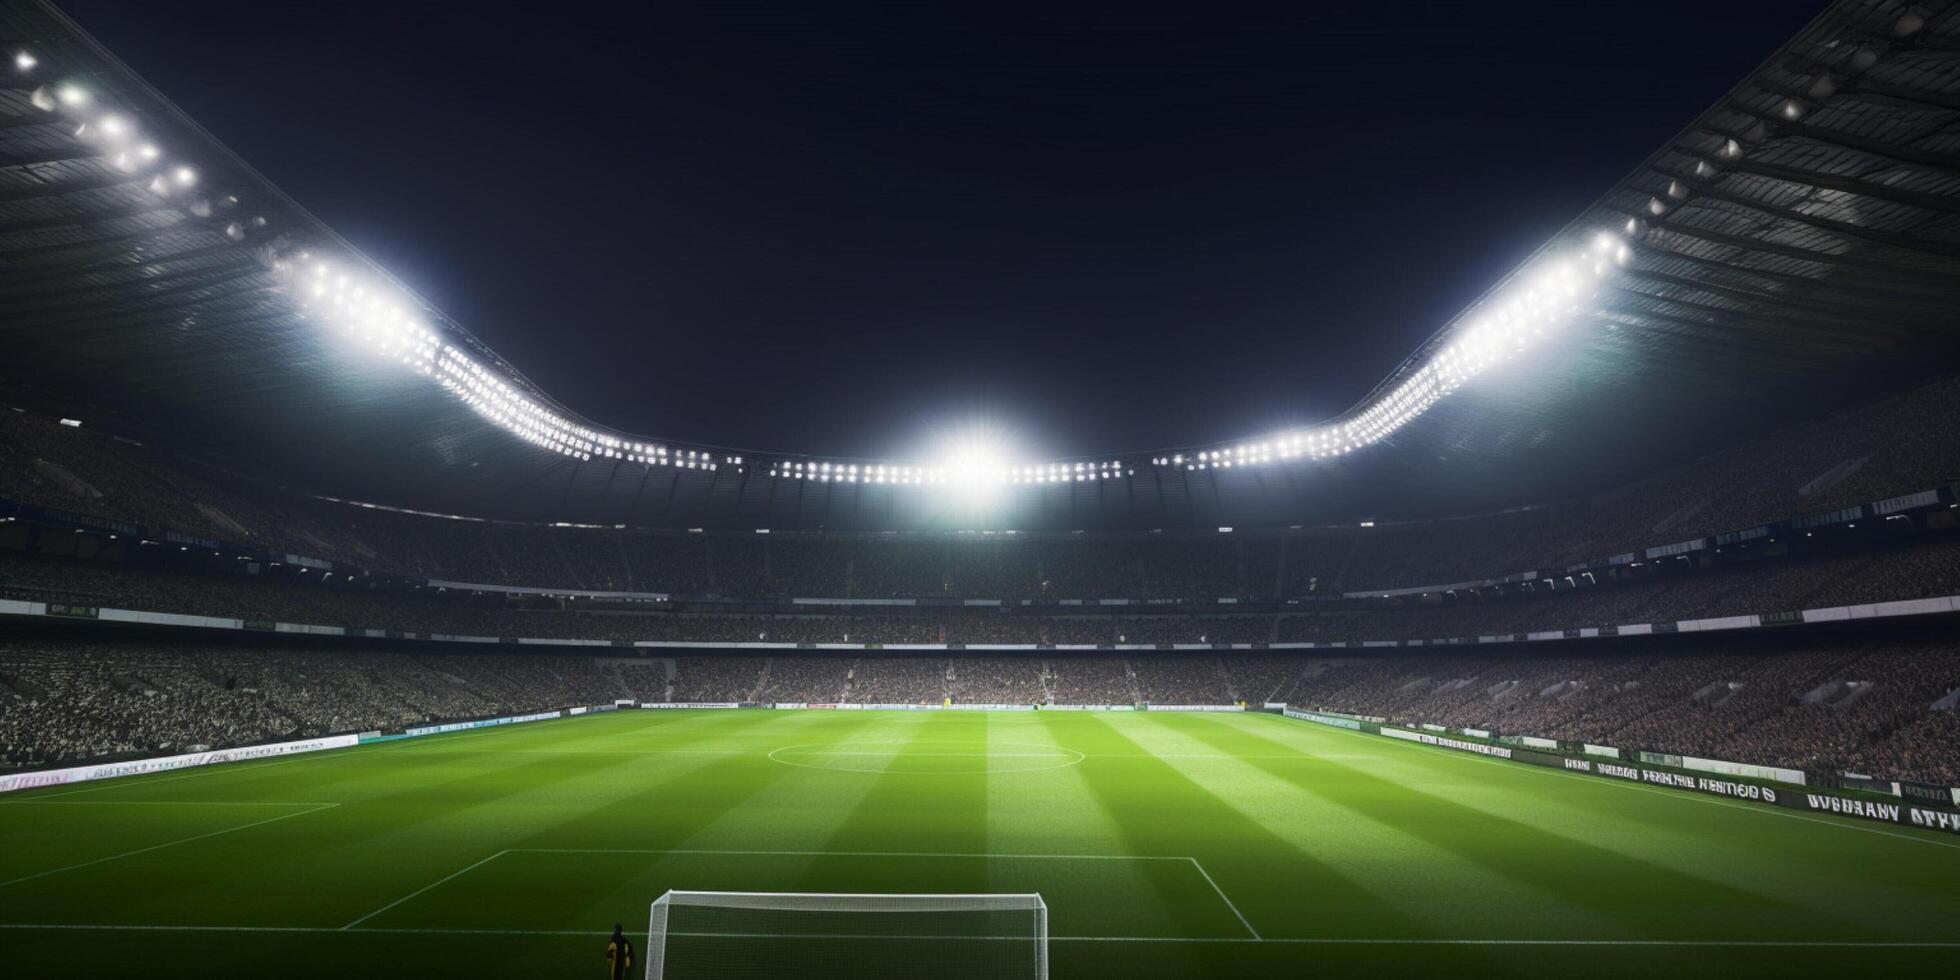 Stadium with lots of light photo